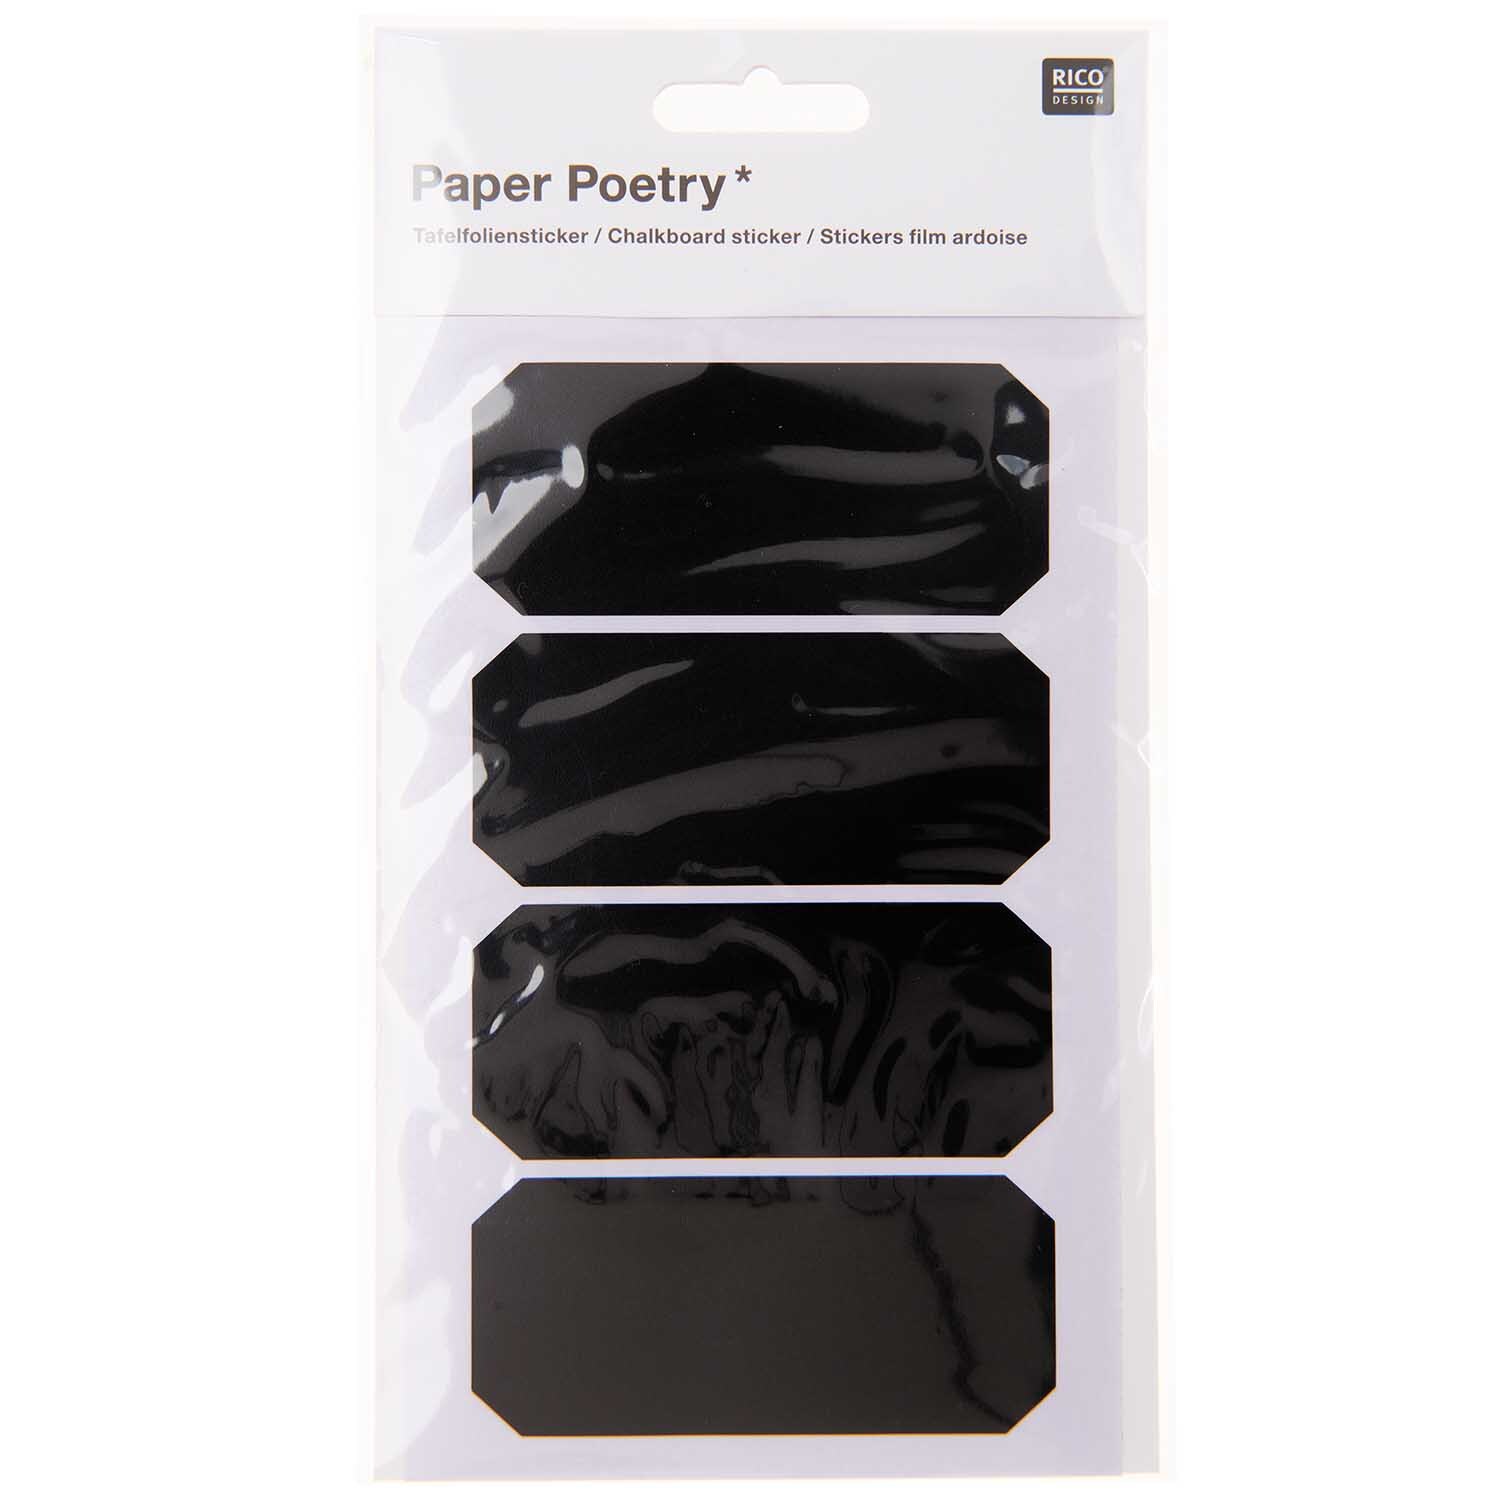 Paper Poetry Tafelfolien Sticker Etiketten schwarz 4 Stück